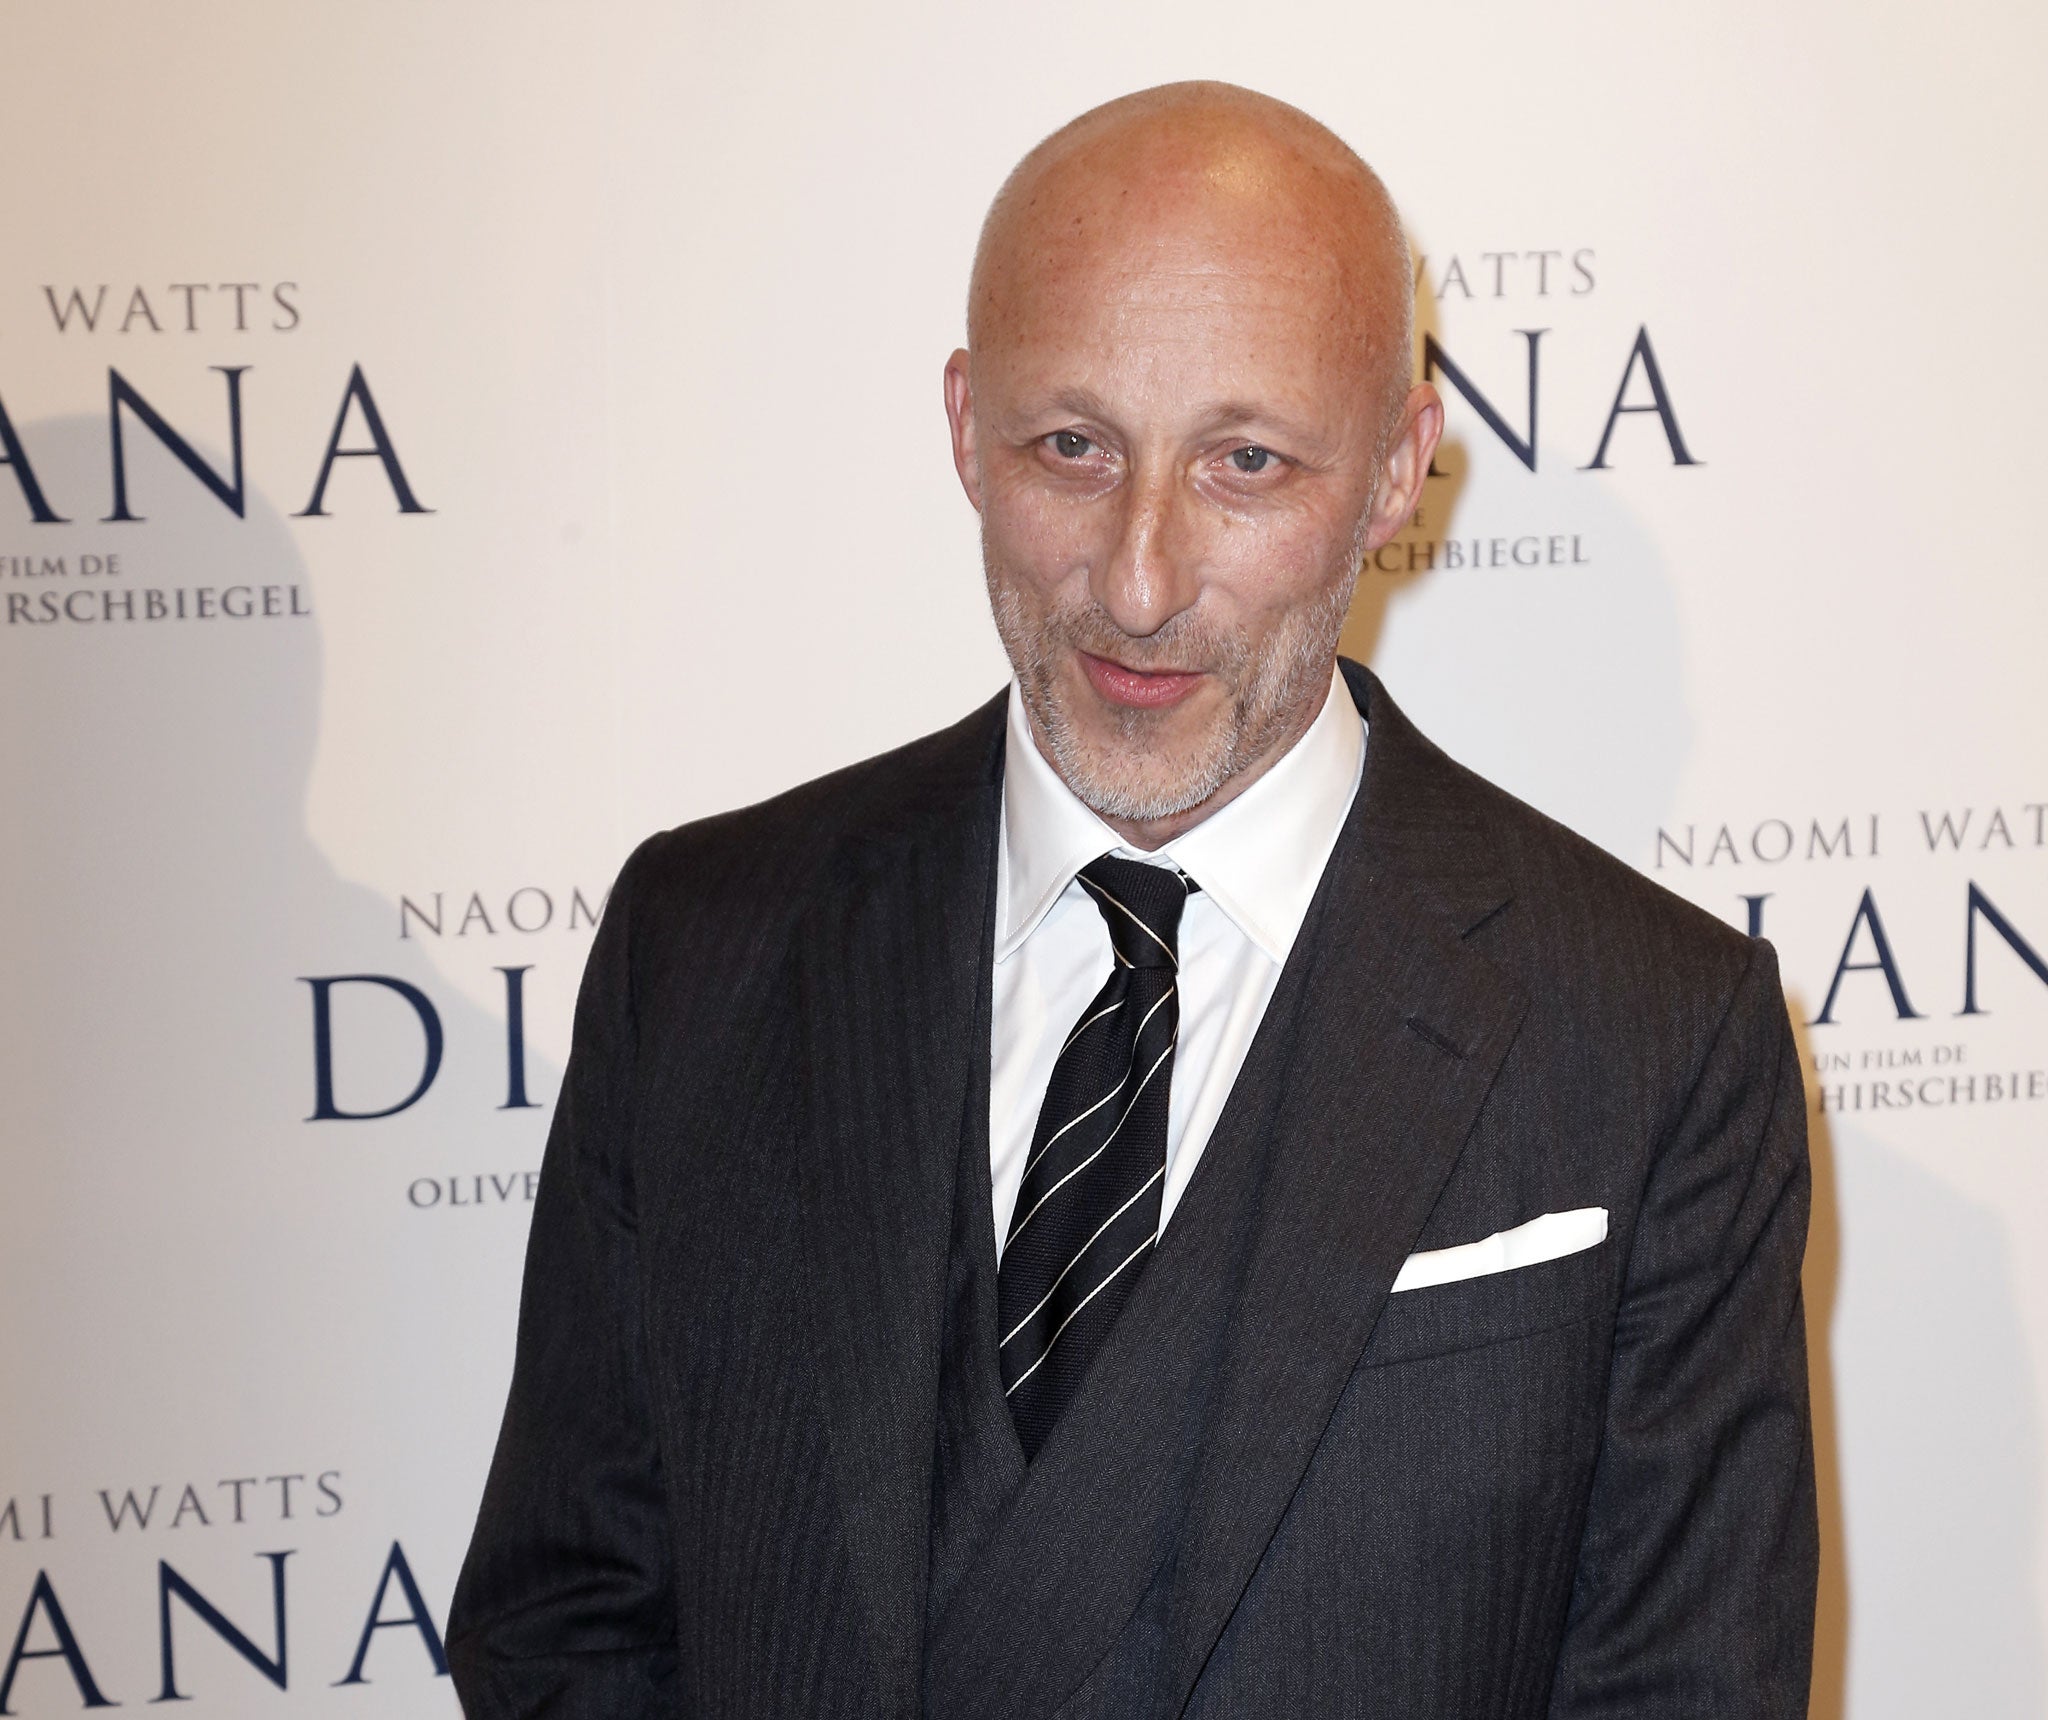 Oliver Hirschbiegel, the director of Diana